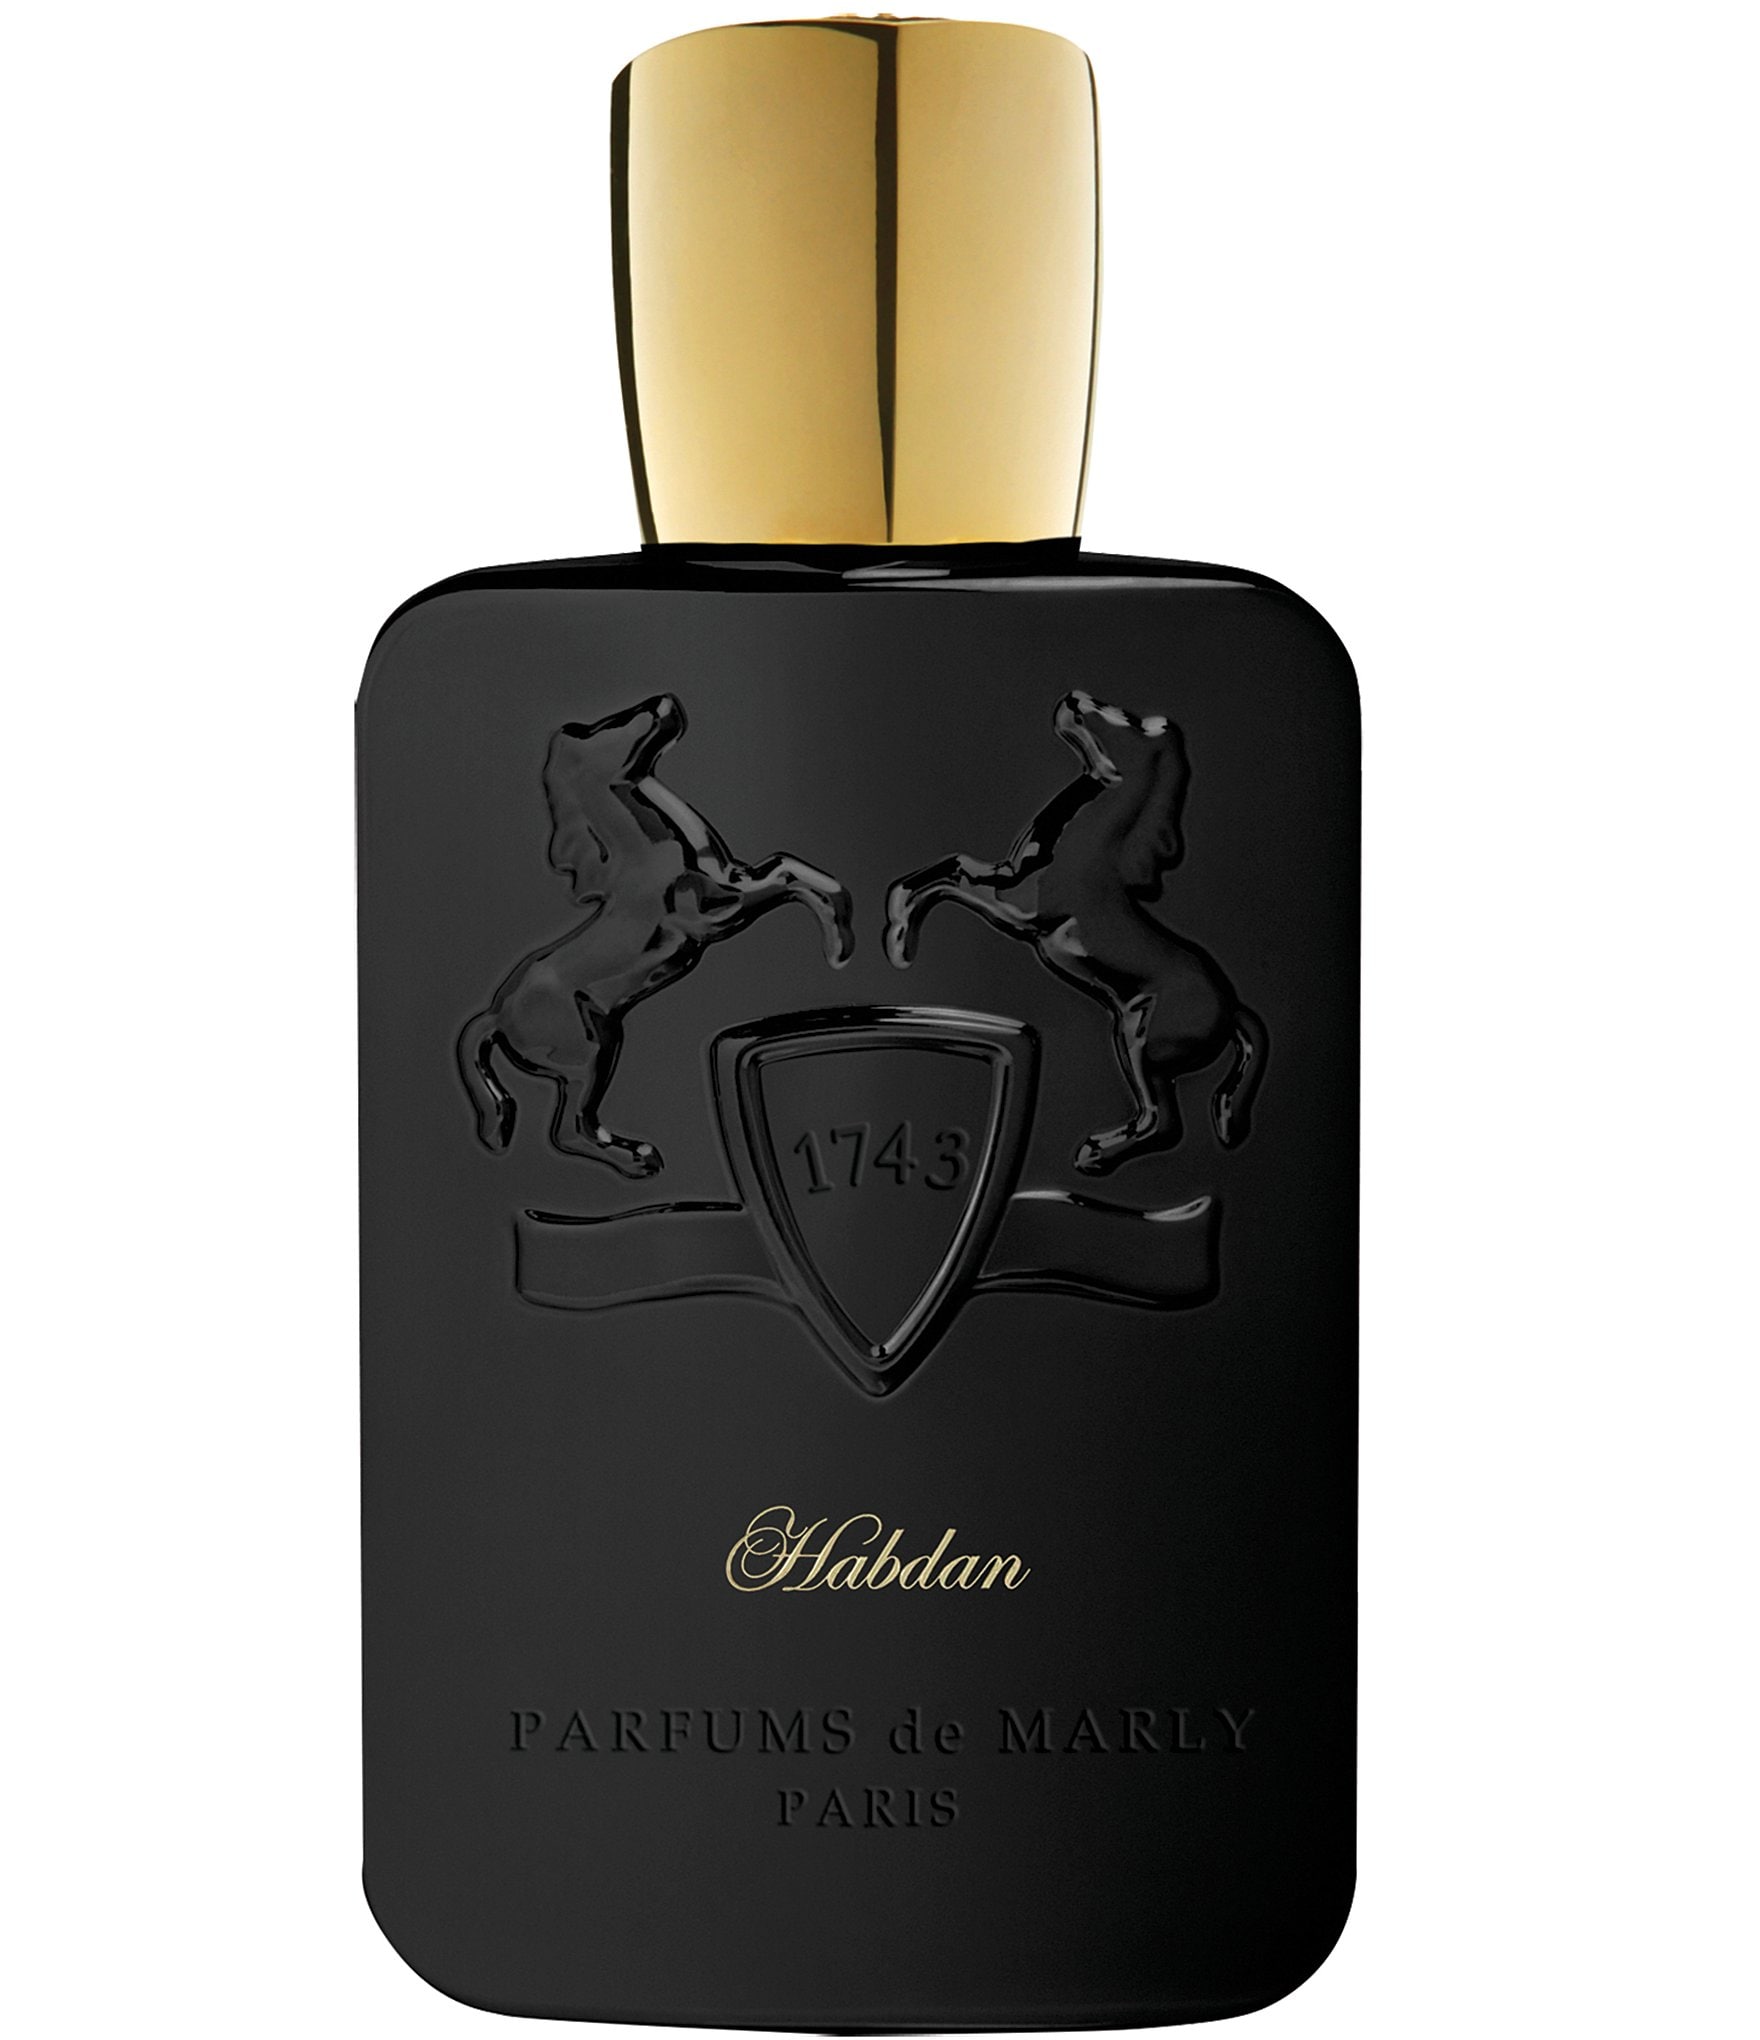 PARFUMS de MARLY Habdan Eau de Parfum | Dillard's